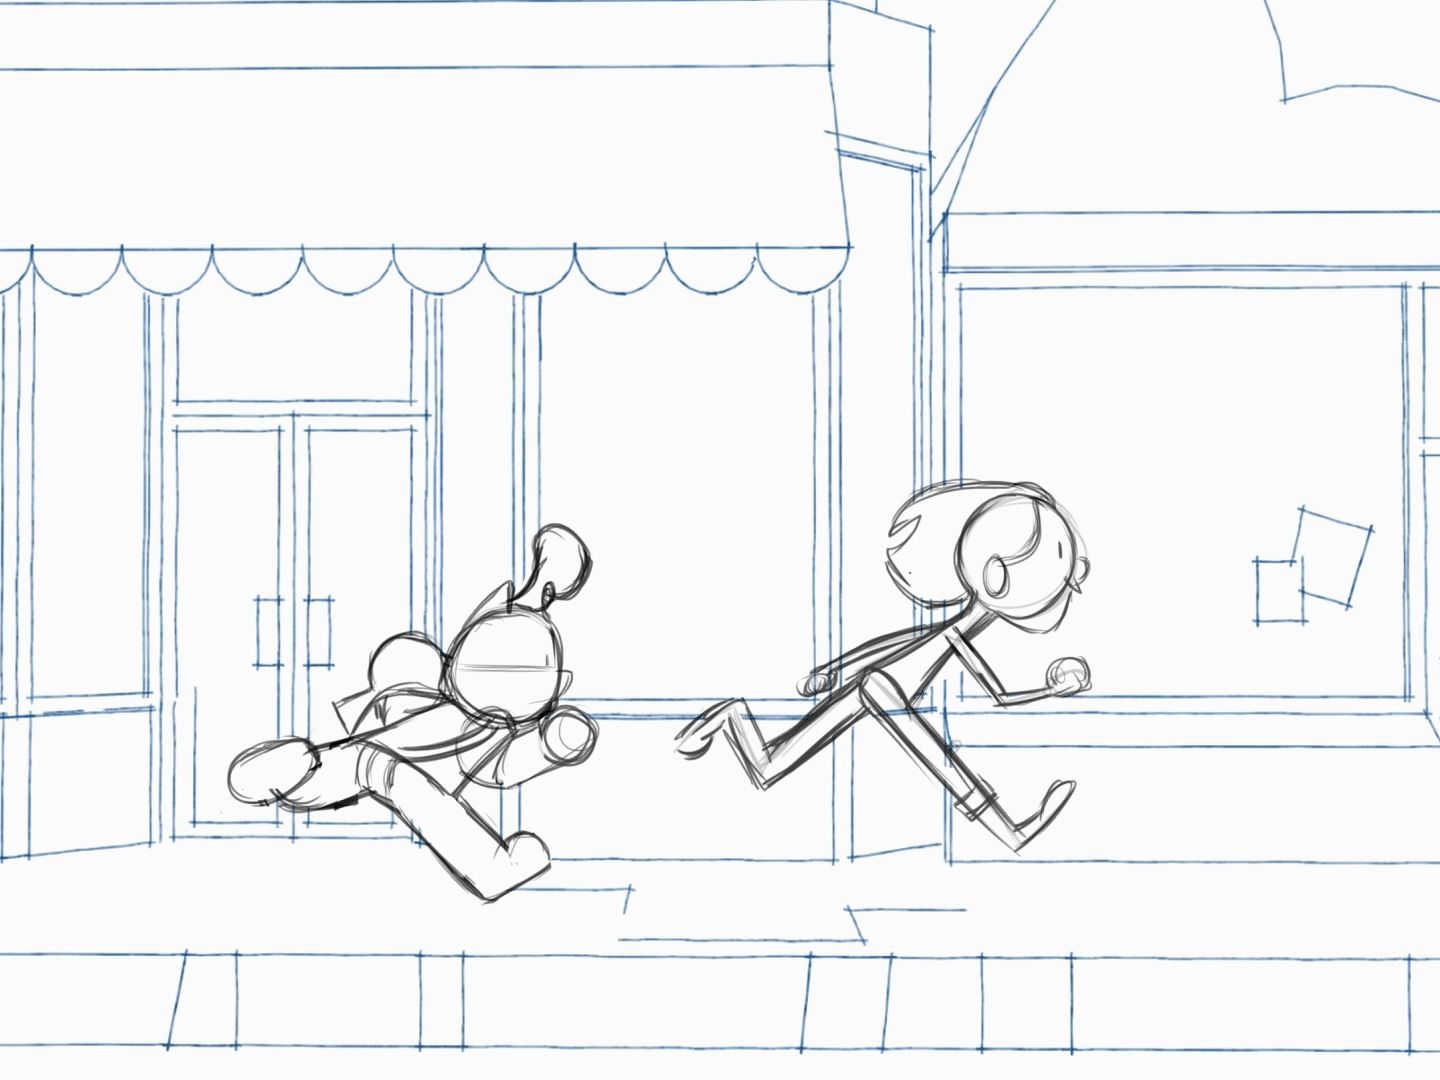 Screenshot from test animation of stick men running on a street